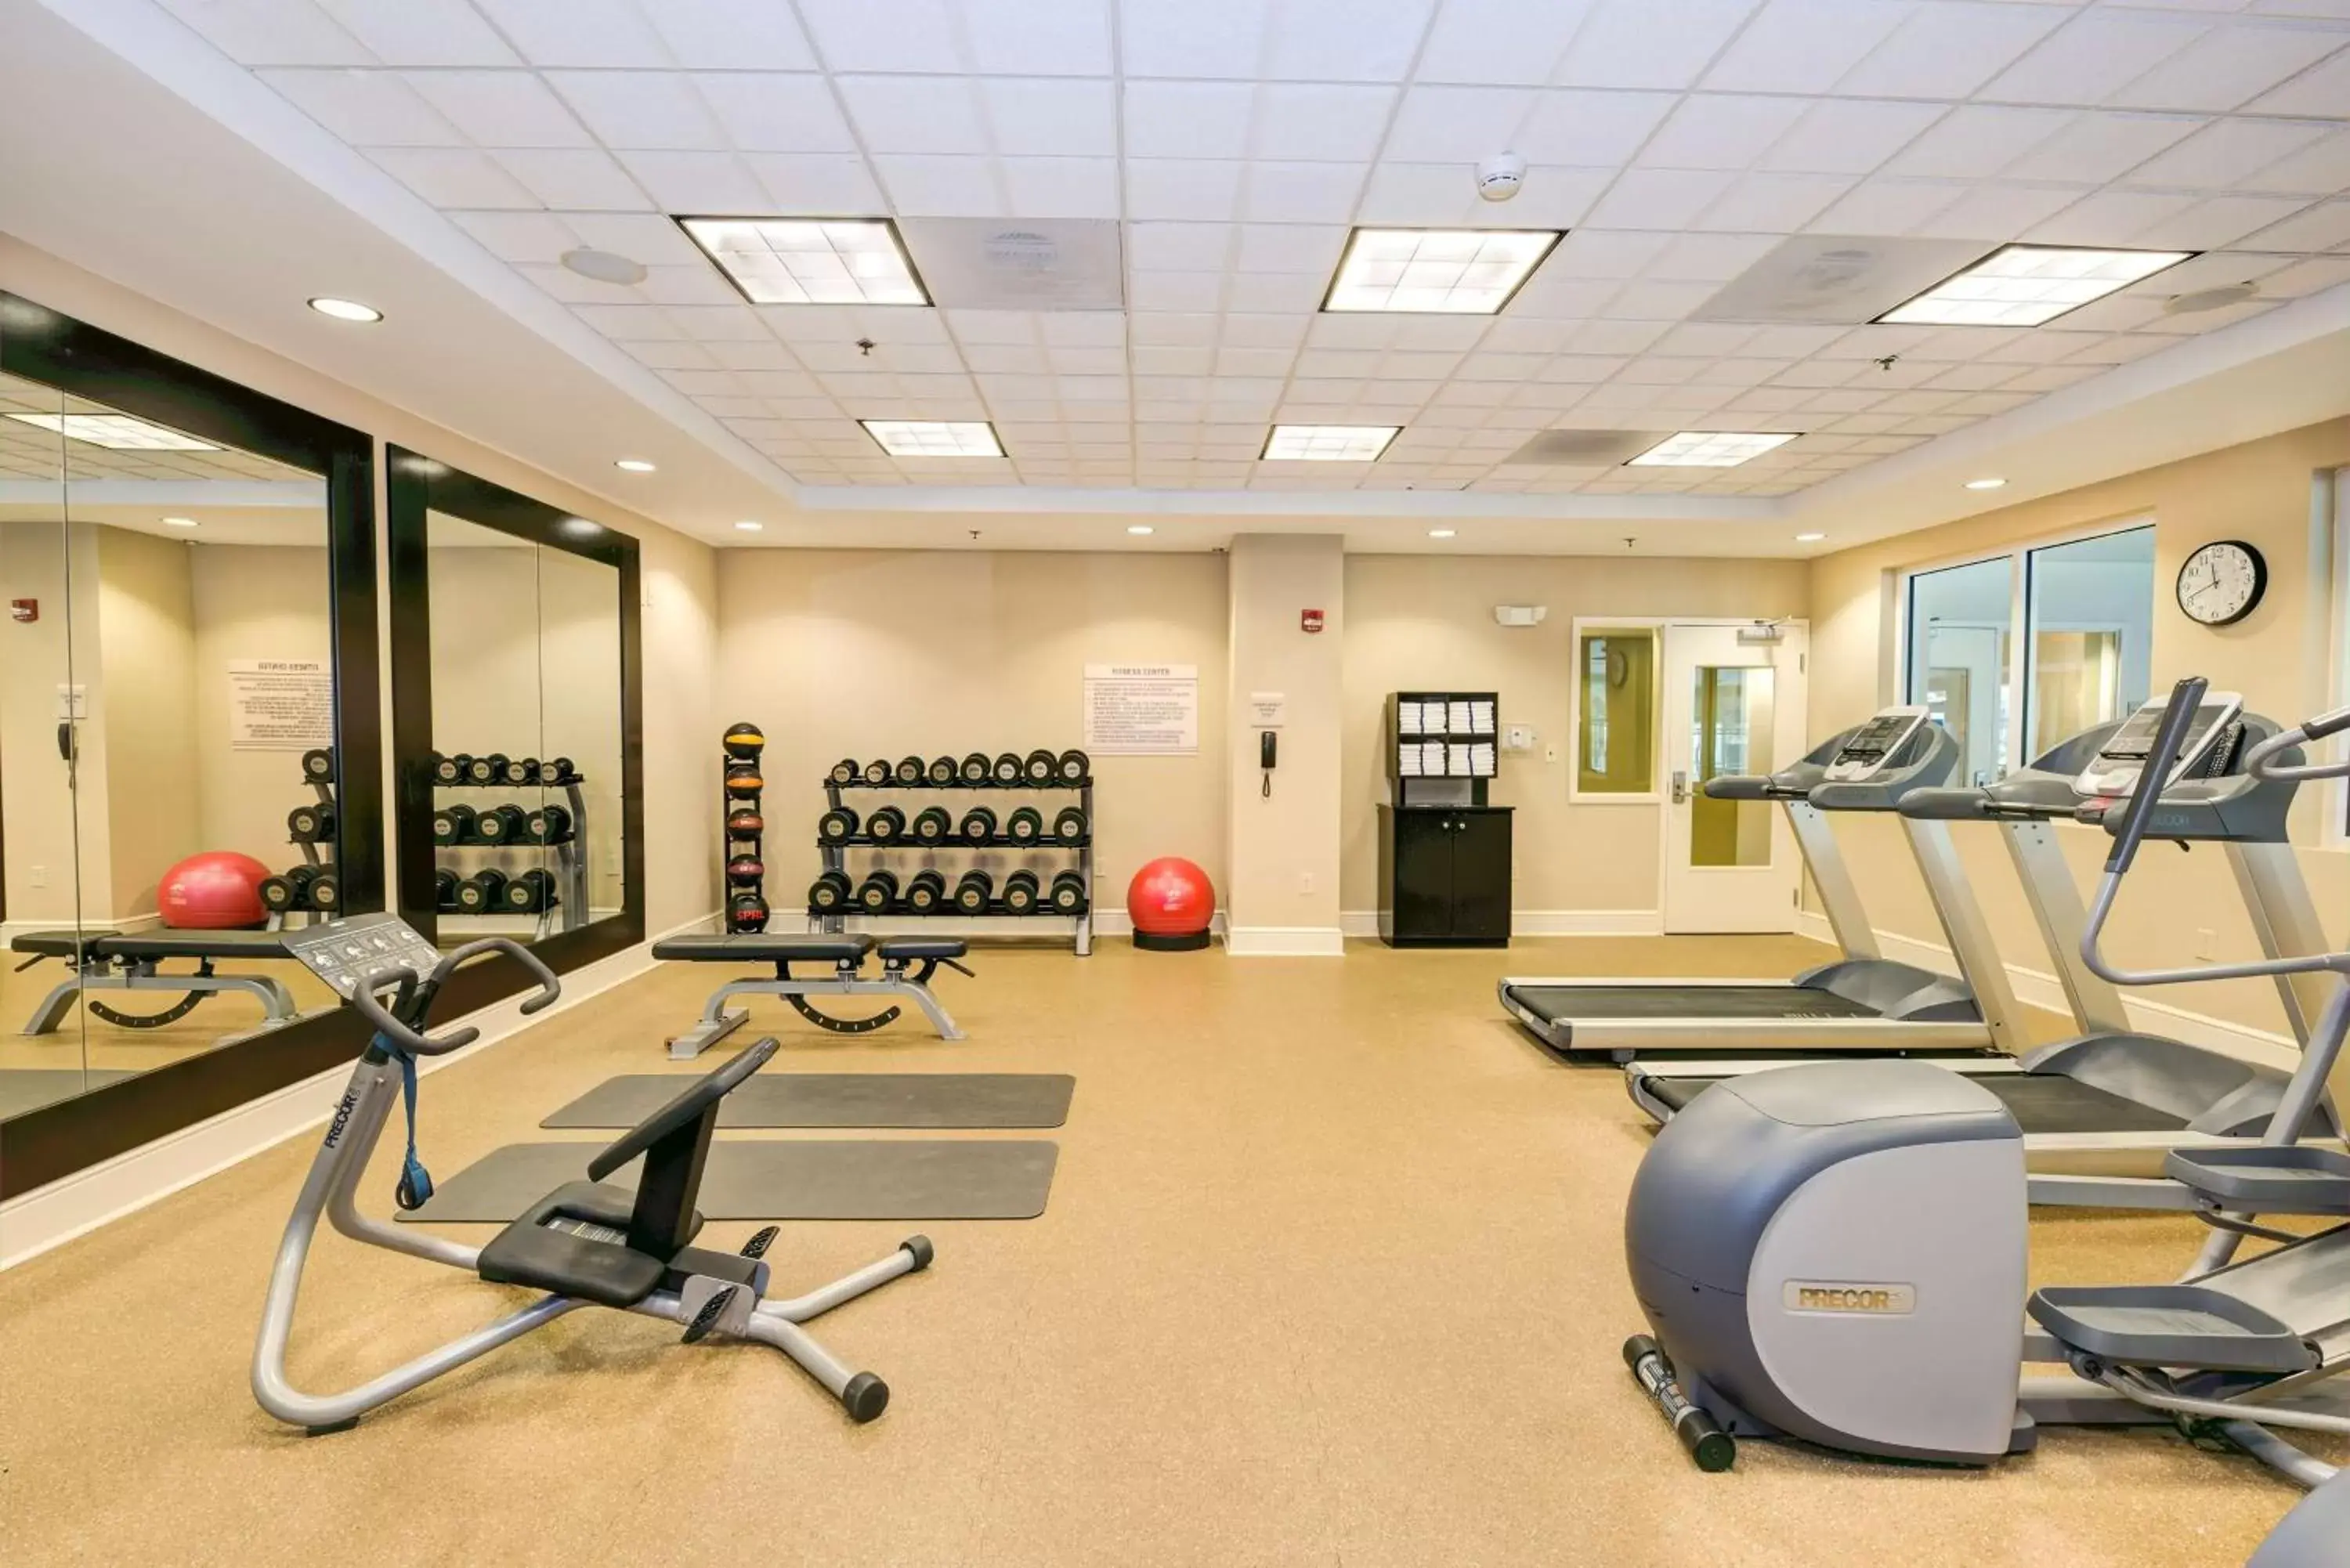 Fitness centre/facilities, Fitness Center/Facilities in Hilton Garden Inn Columbia/Northeast